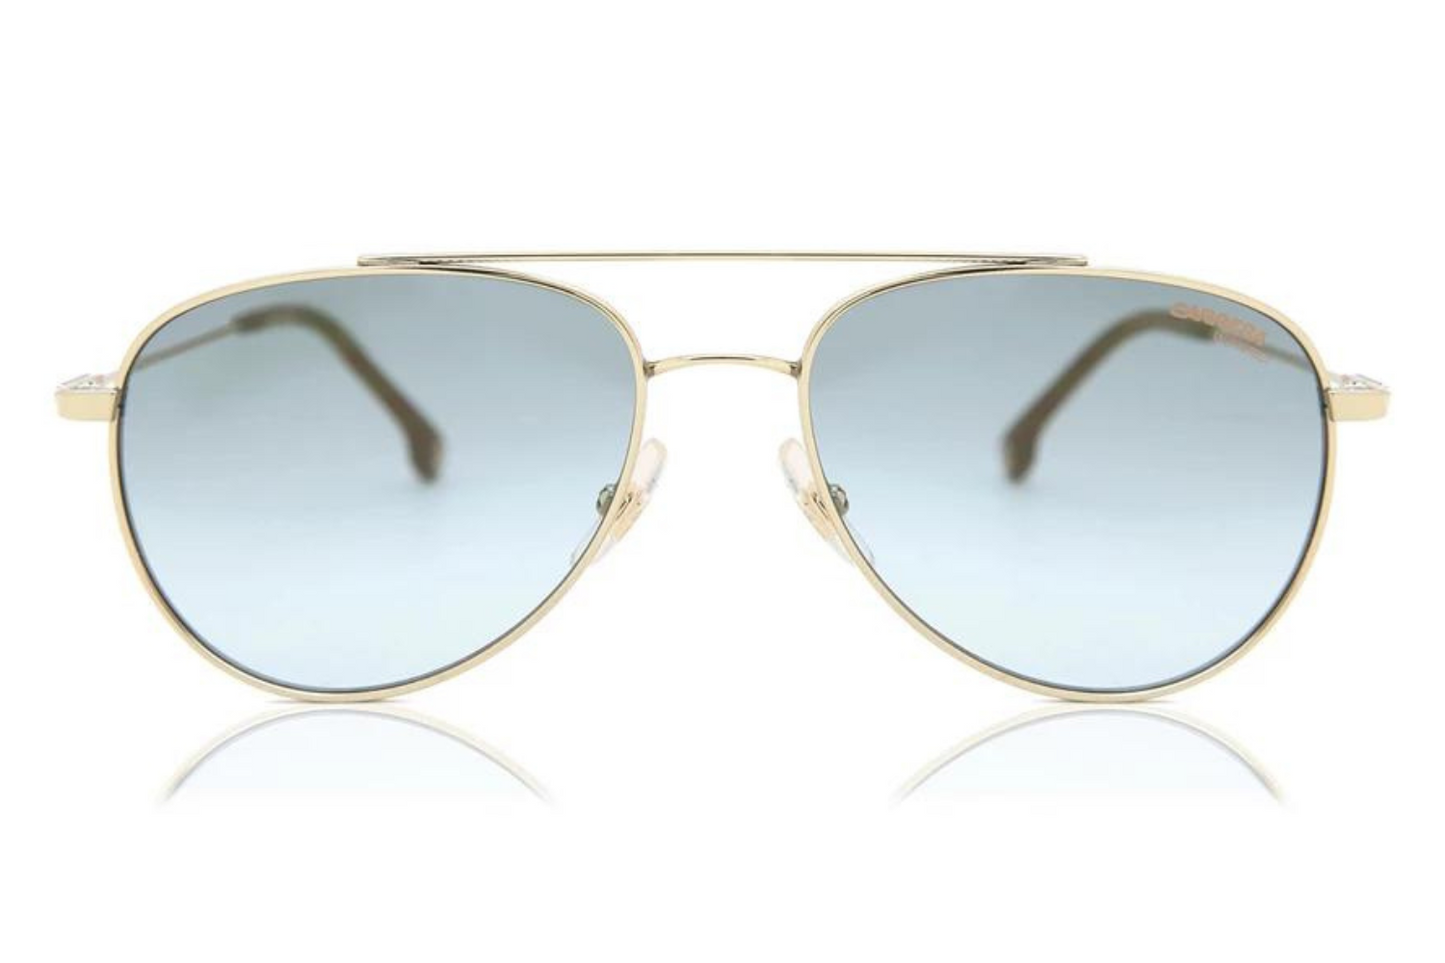 Carrera Sunglasses 187/S